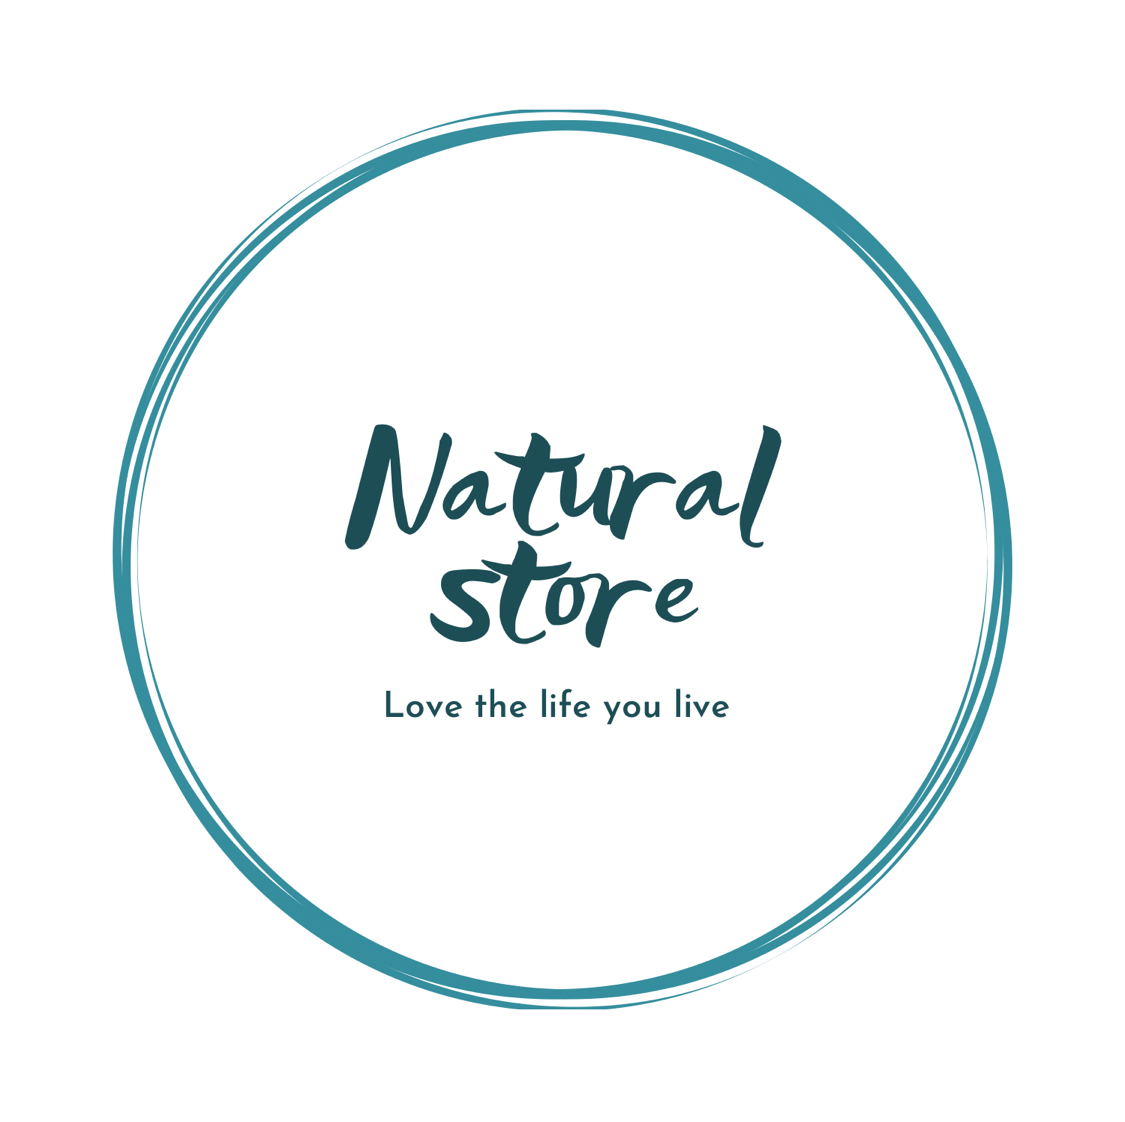 Natural store